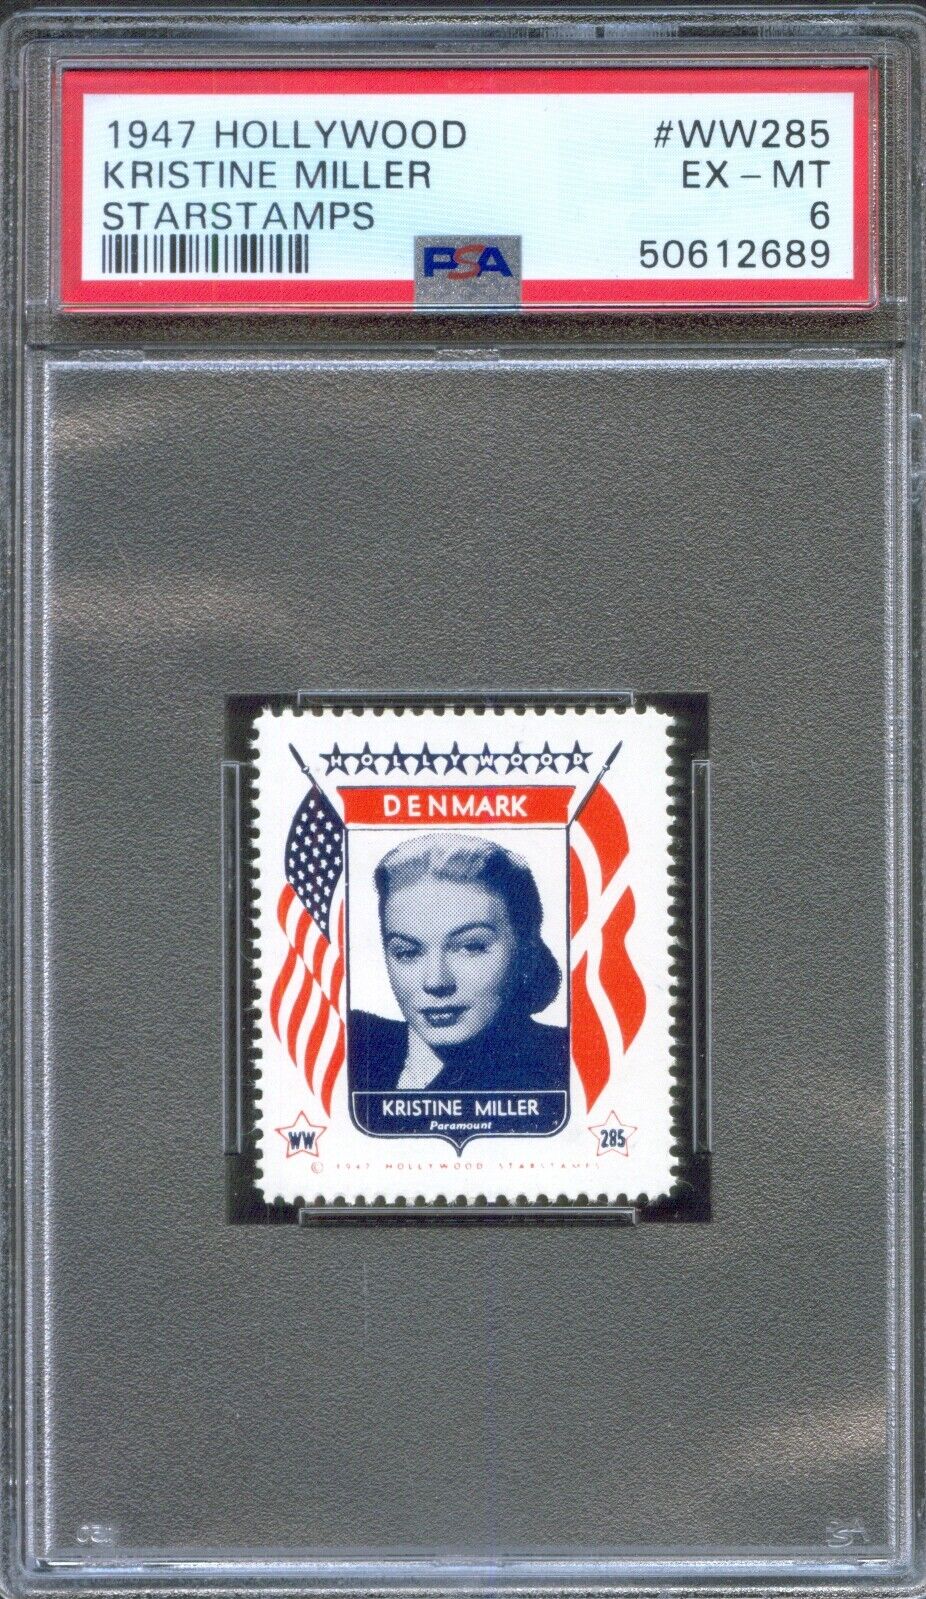 1947 Hollywood StarStamps #WW285 KRISTINE MILLER Danish WESTERN Actress PSA 6